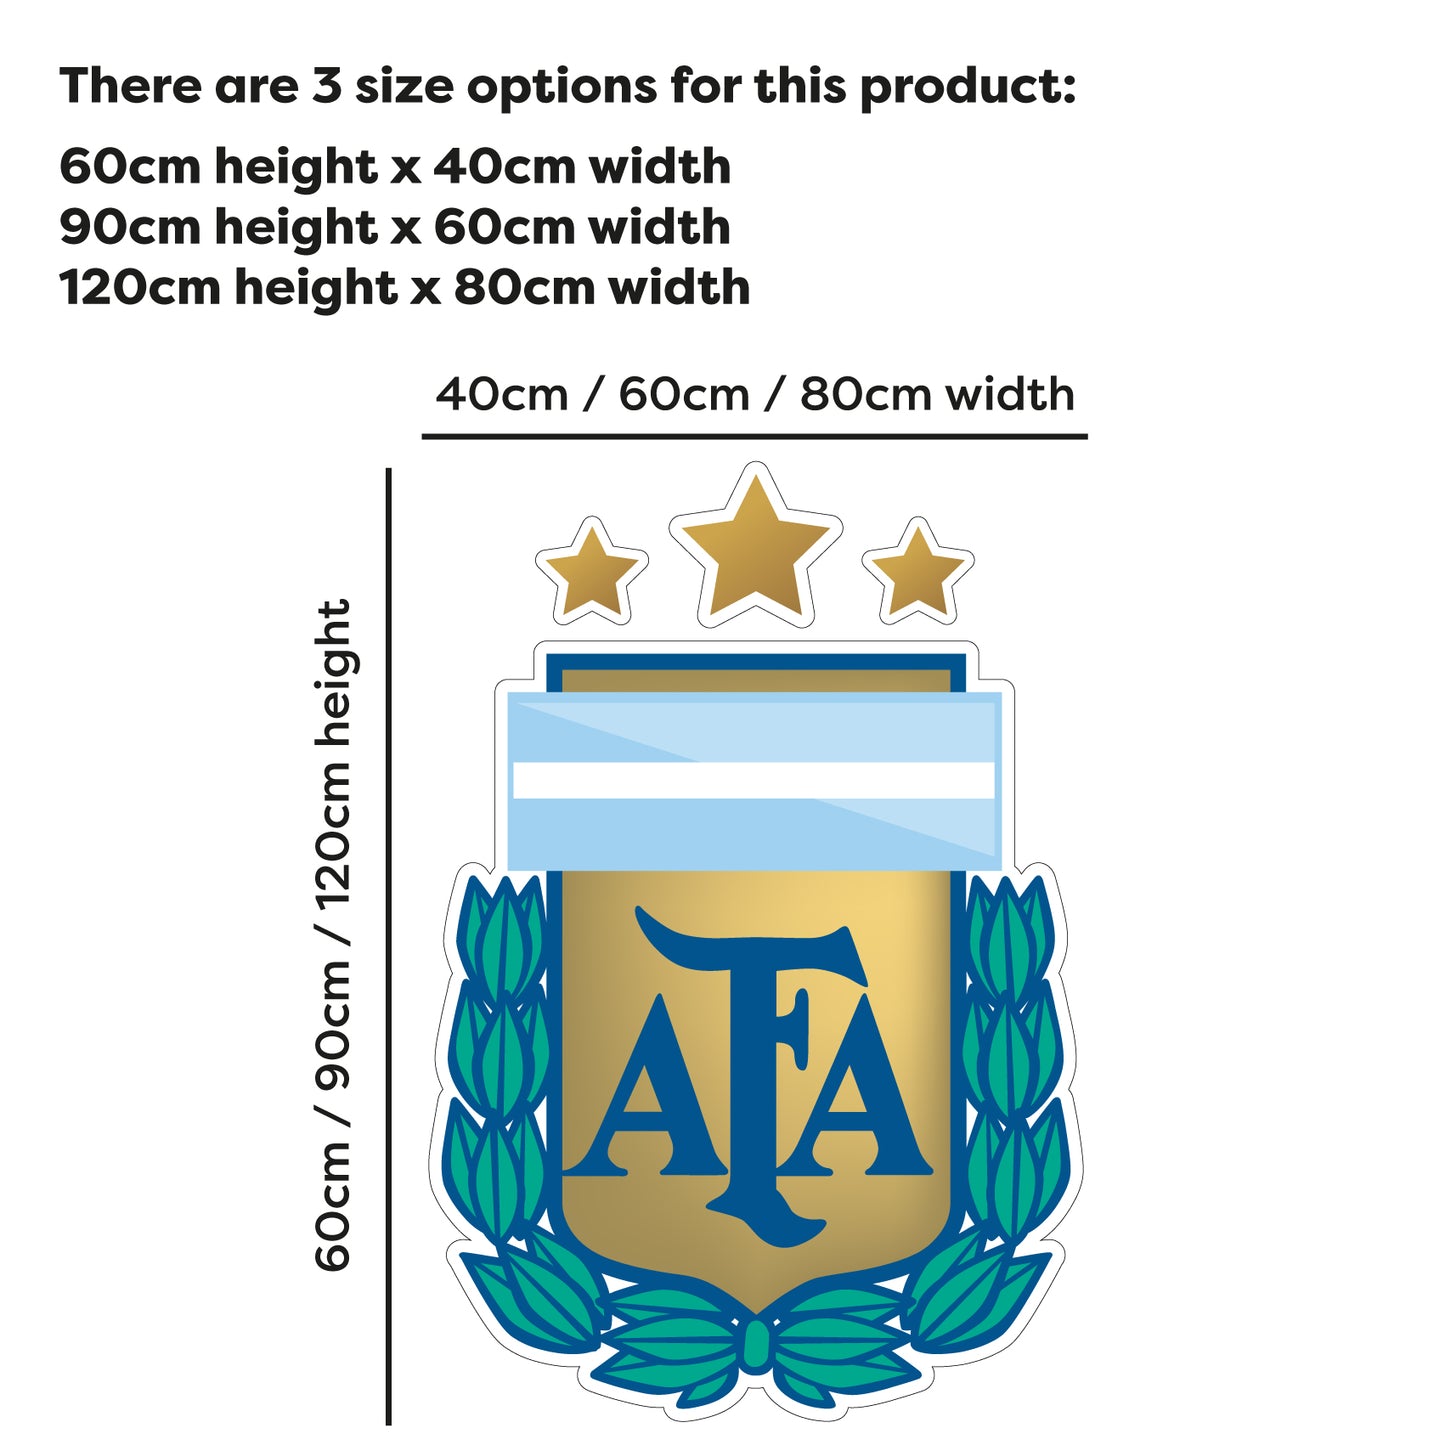 Argentina Football Club - AFA Crest Wall Sticker